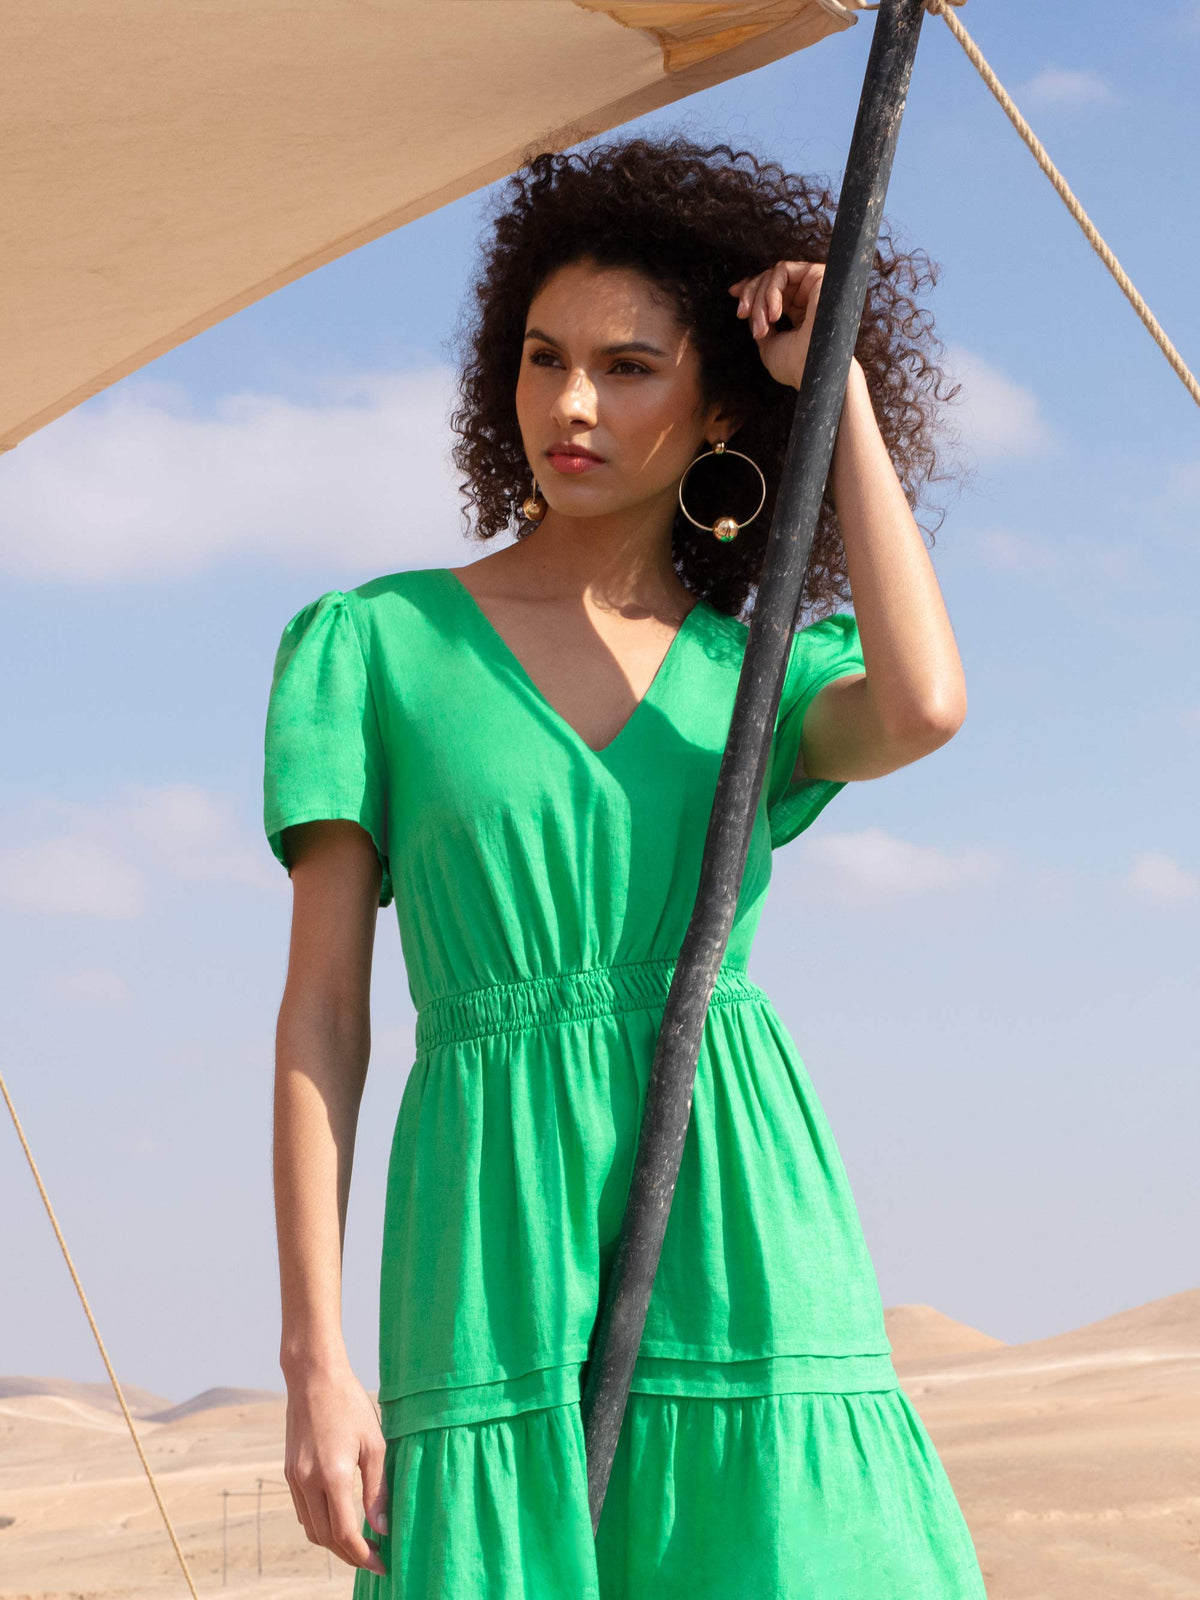 Linen Midi Dress With Adjustable Straps LINDA, Flowy Linen Dress, Linen  Beach Dress in Green, White or Other Color, Linen Sundress 